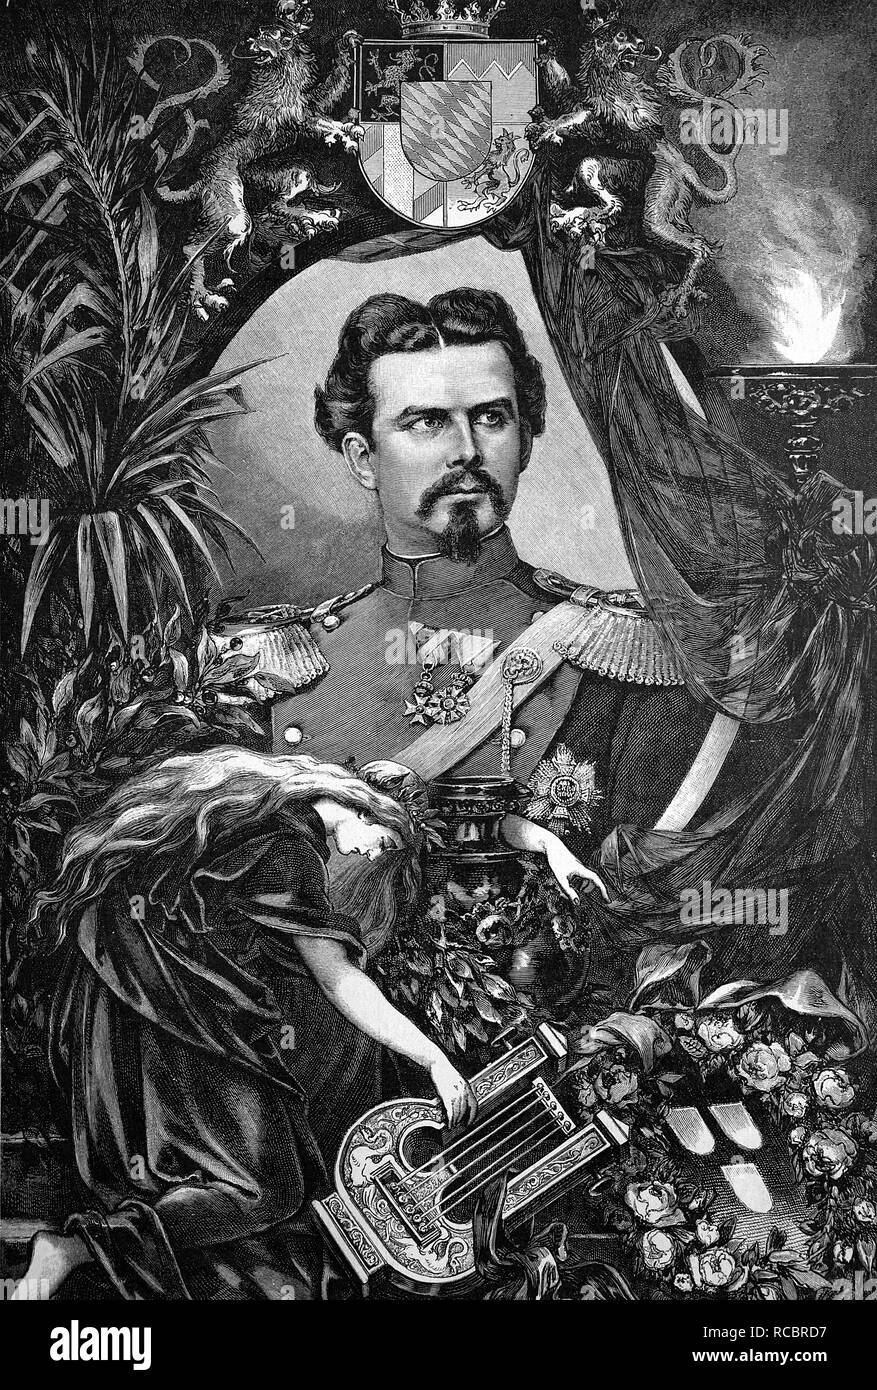 King Ludwig II of Bavaria, Ludwig II Otto Friedrich Wilhelm von Bayern, 1845 - 1886, decendant from the German royal house of Stock Photo